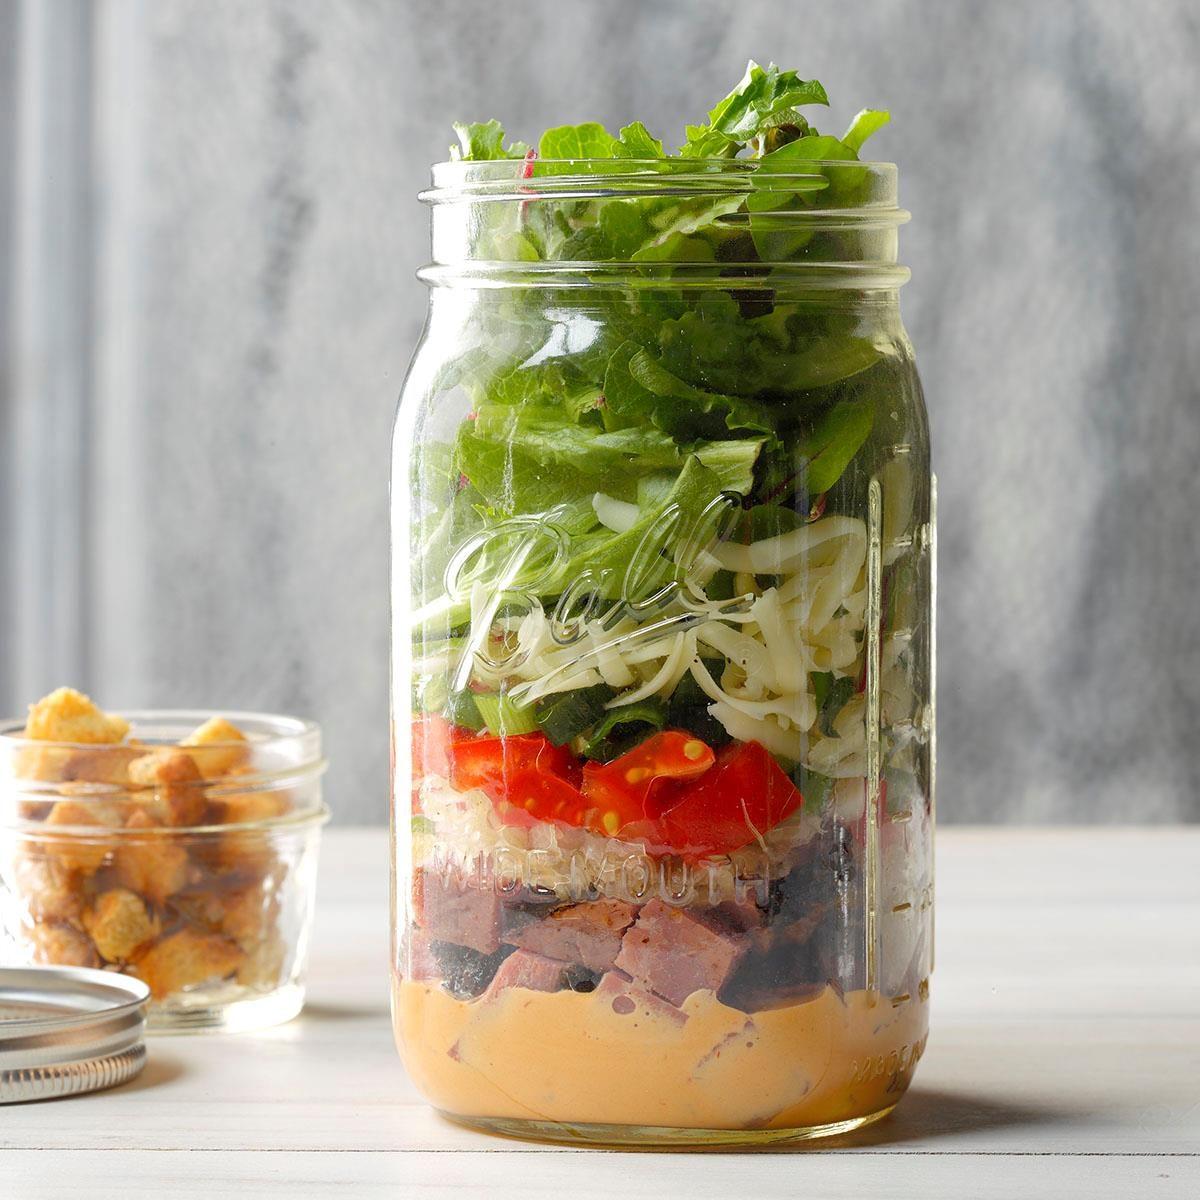 Easy Salad Meal Prep - style preservation